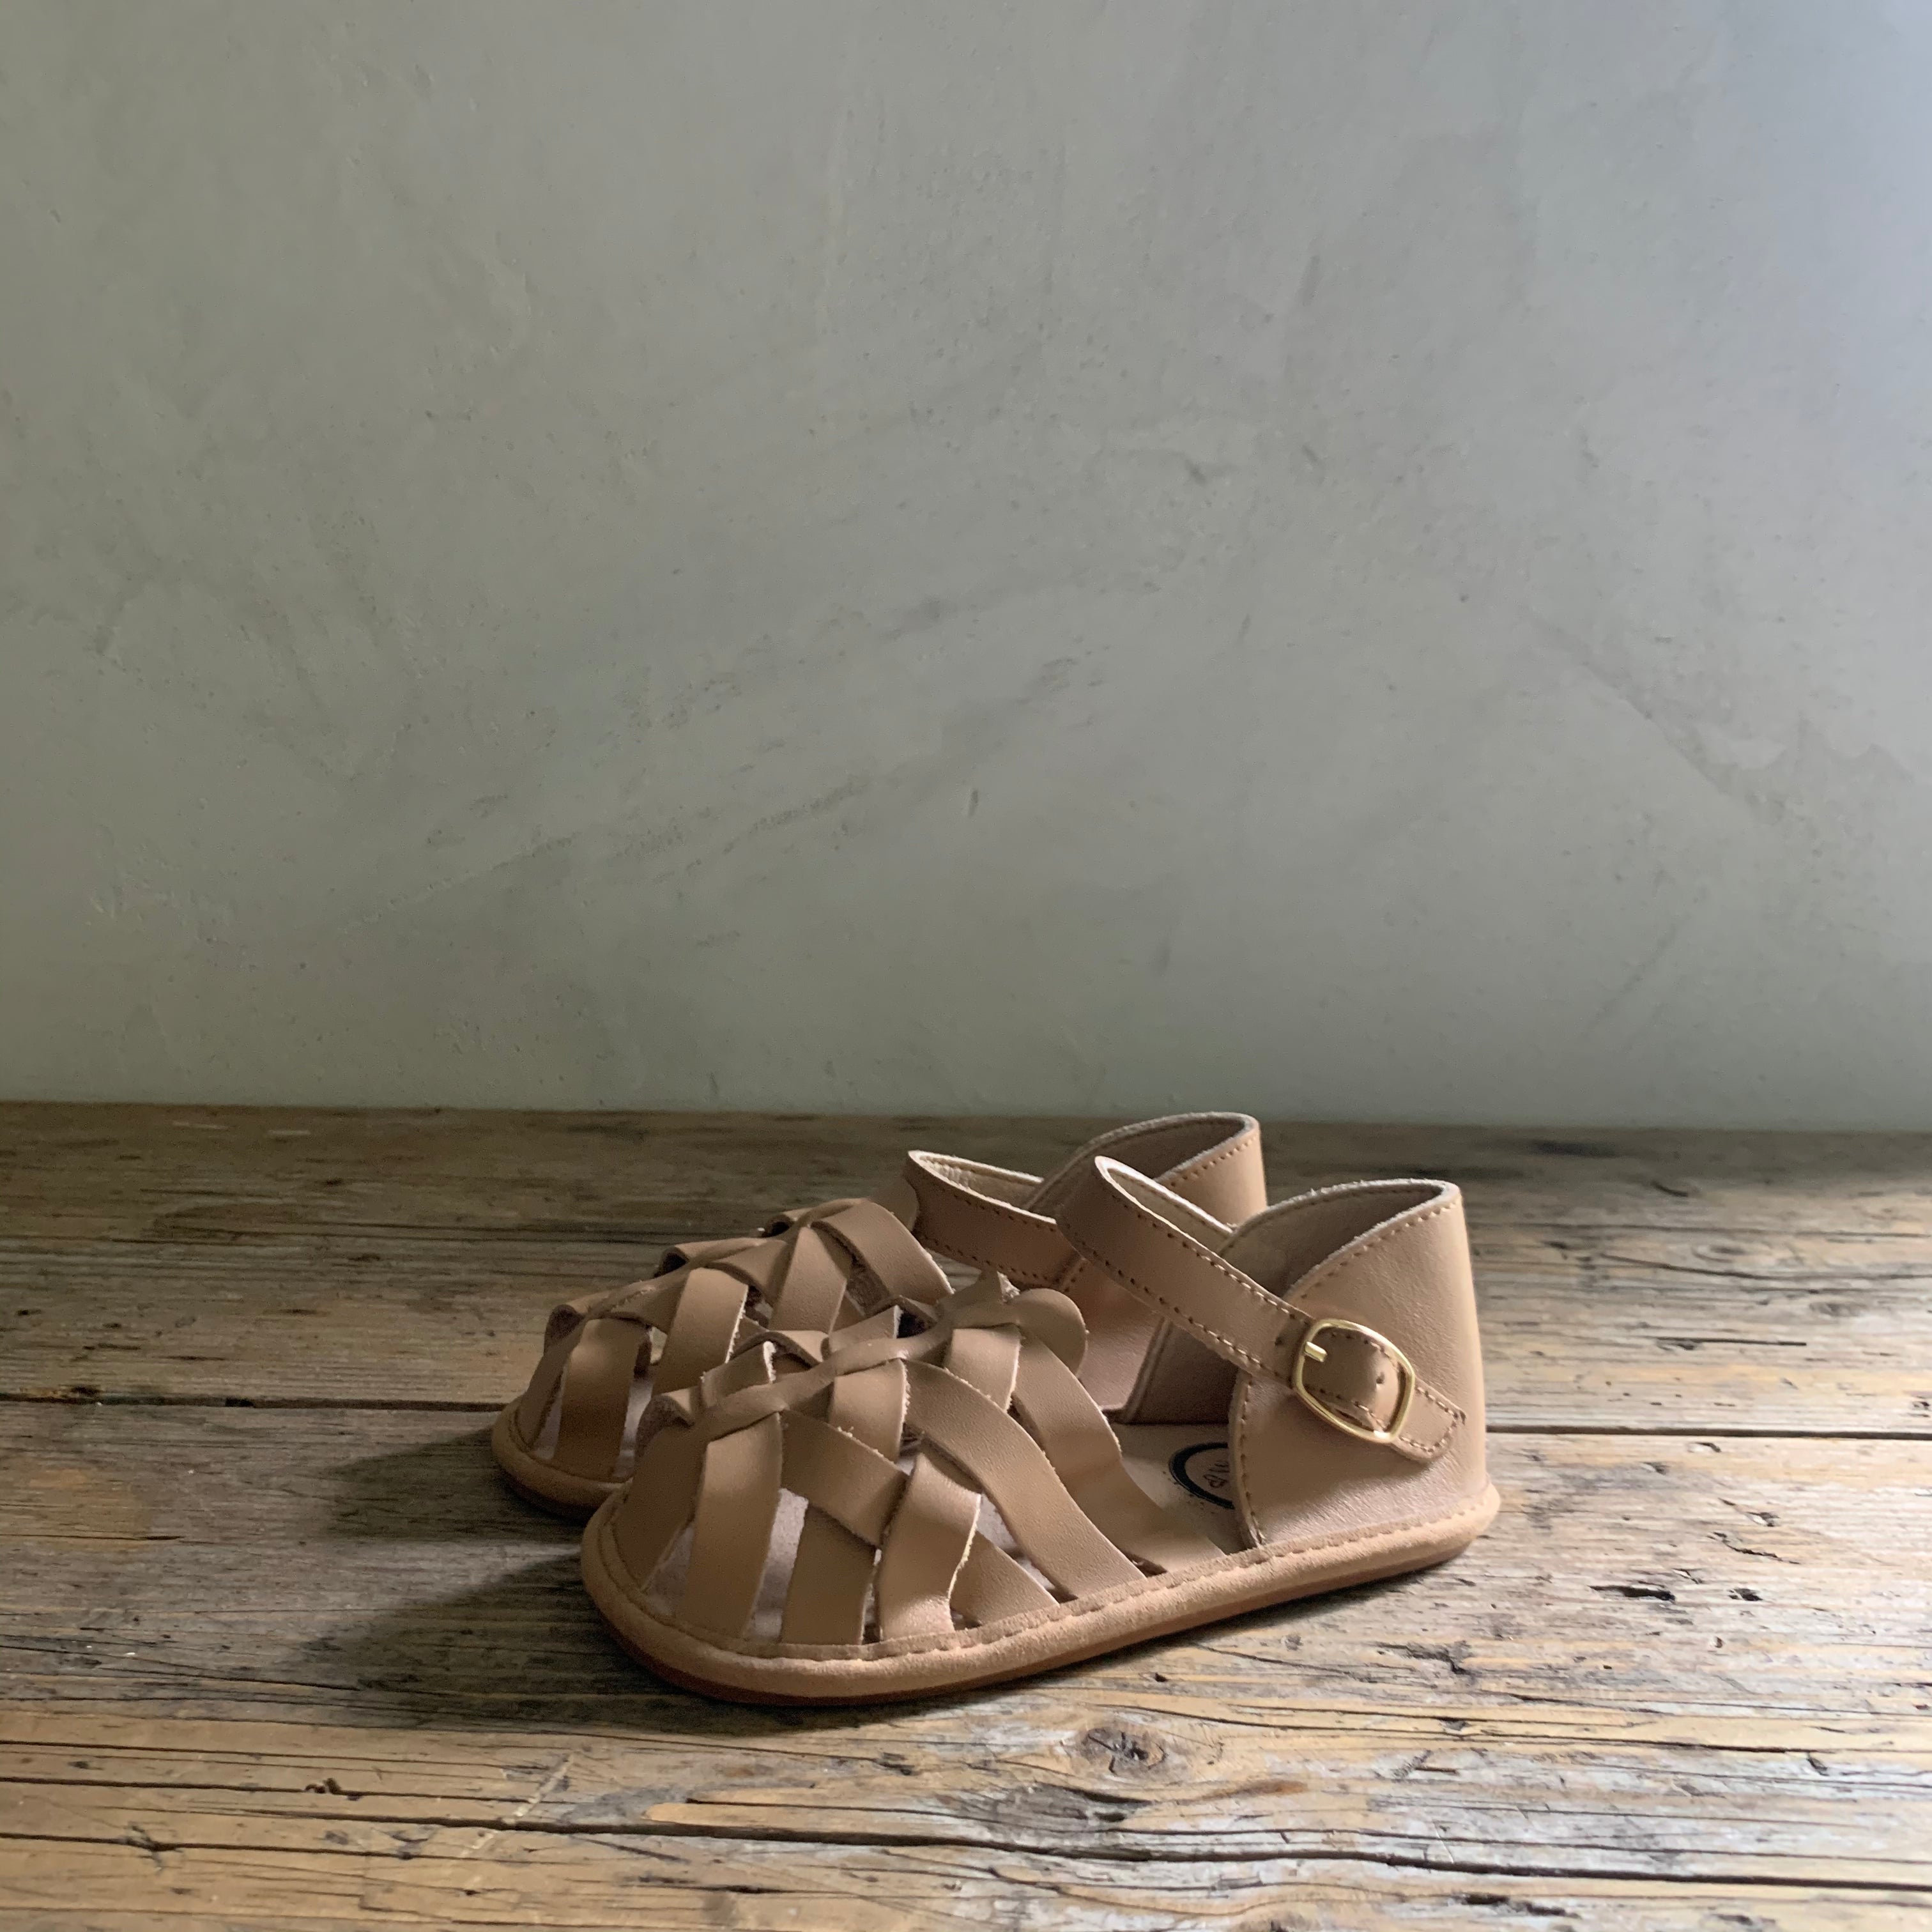 sandal moccasin - tan leather